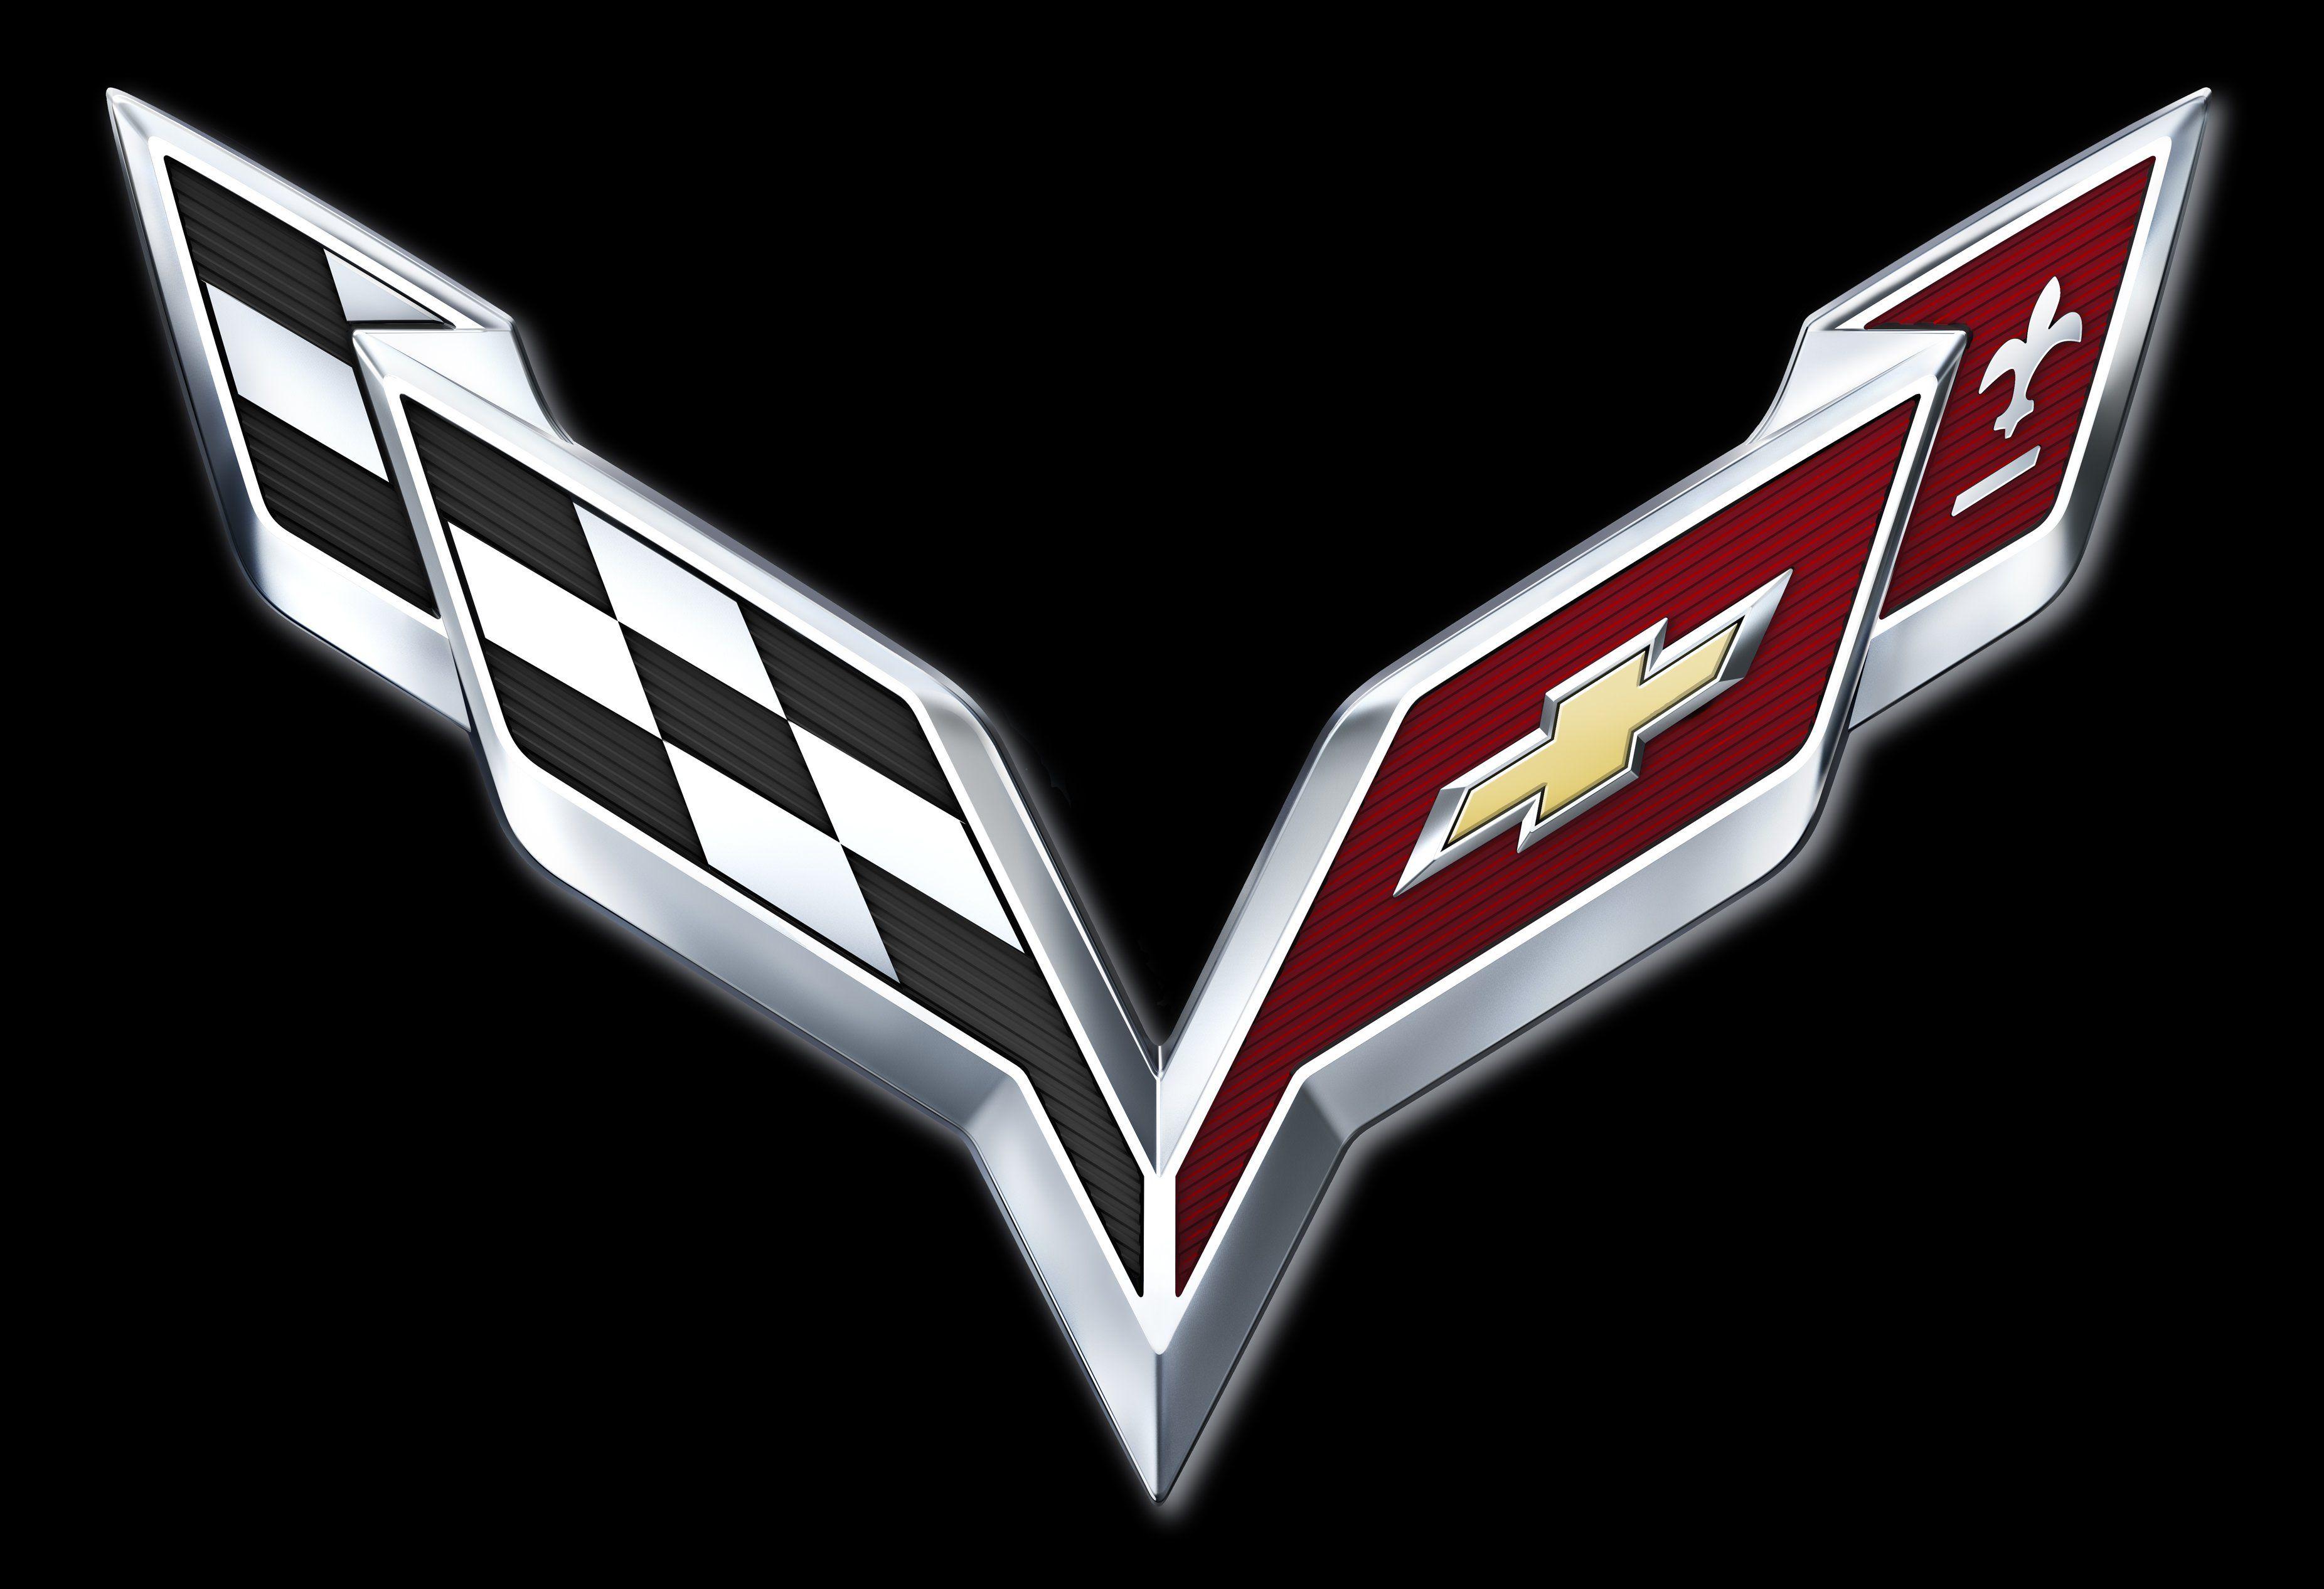 Corvette Logo - Evolution Of The Corvette And The Crossed Flags Logo | Top Speed